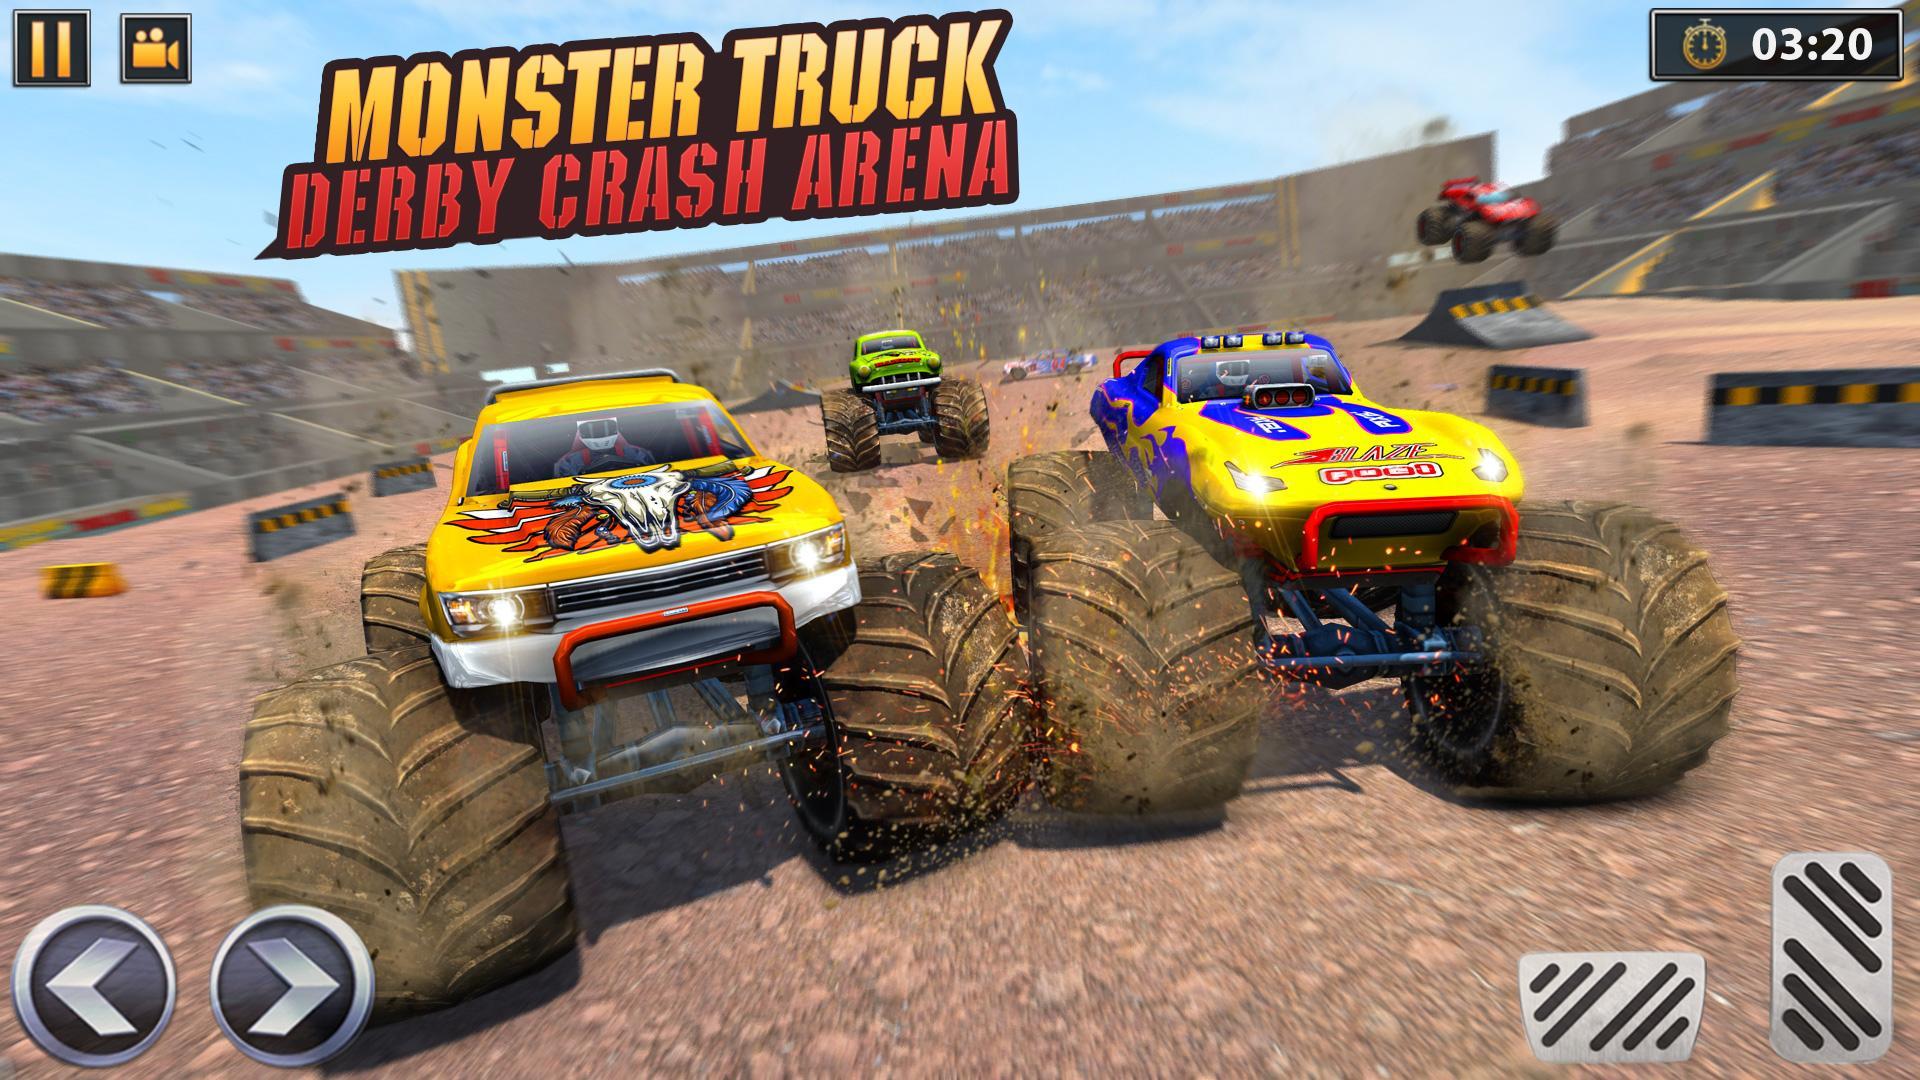 Real Monster Truck Demolition Derby Crash Stunts 3.0.3 Screenshot 3